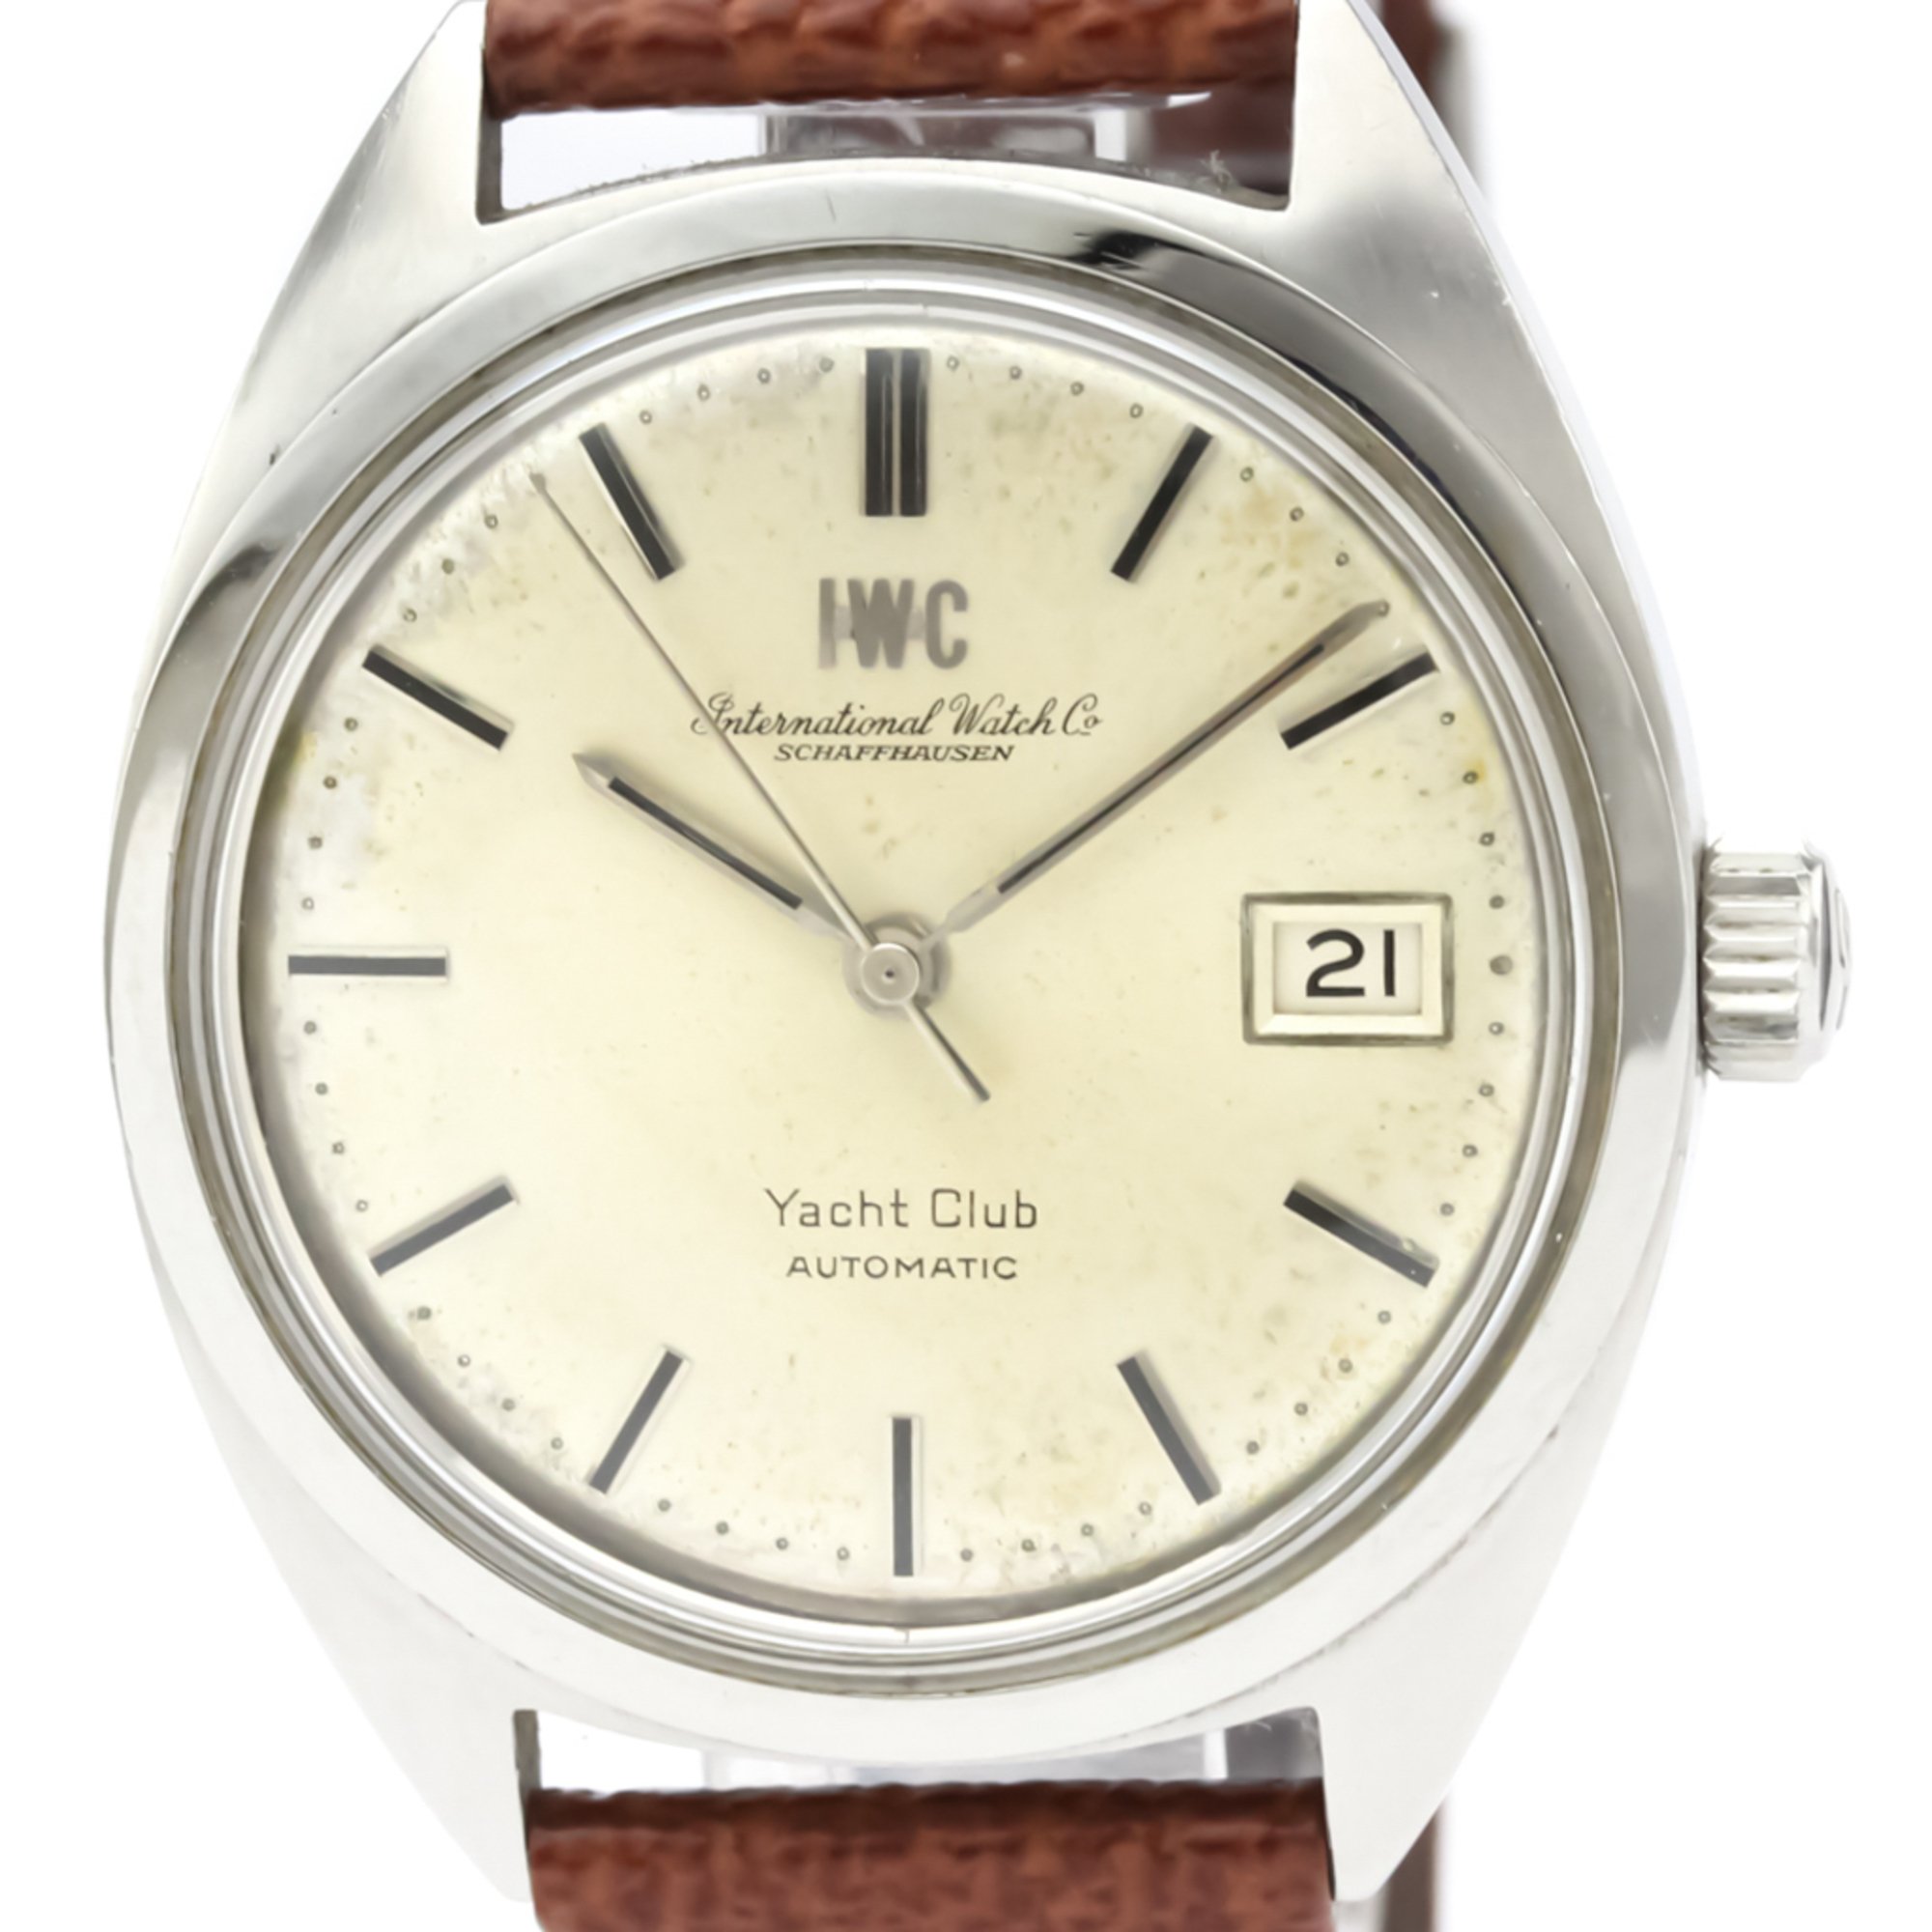 IWC Yacht Club Automatic Stainless Steel Dress Watch